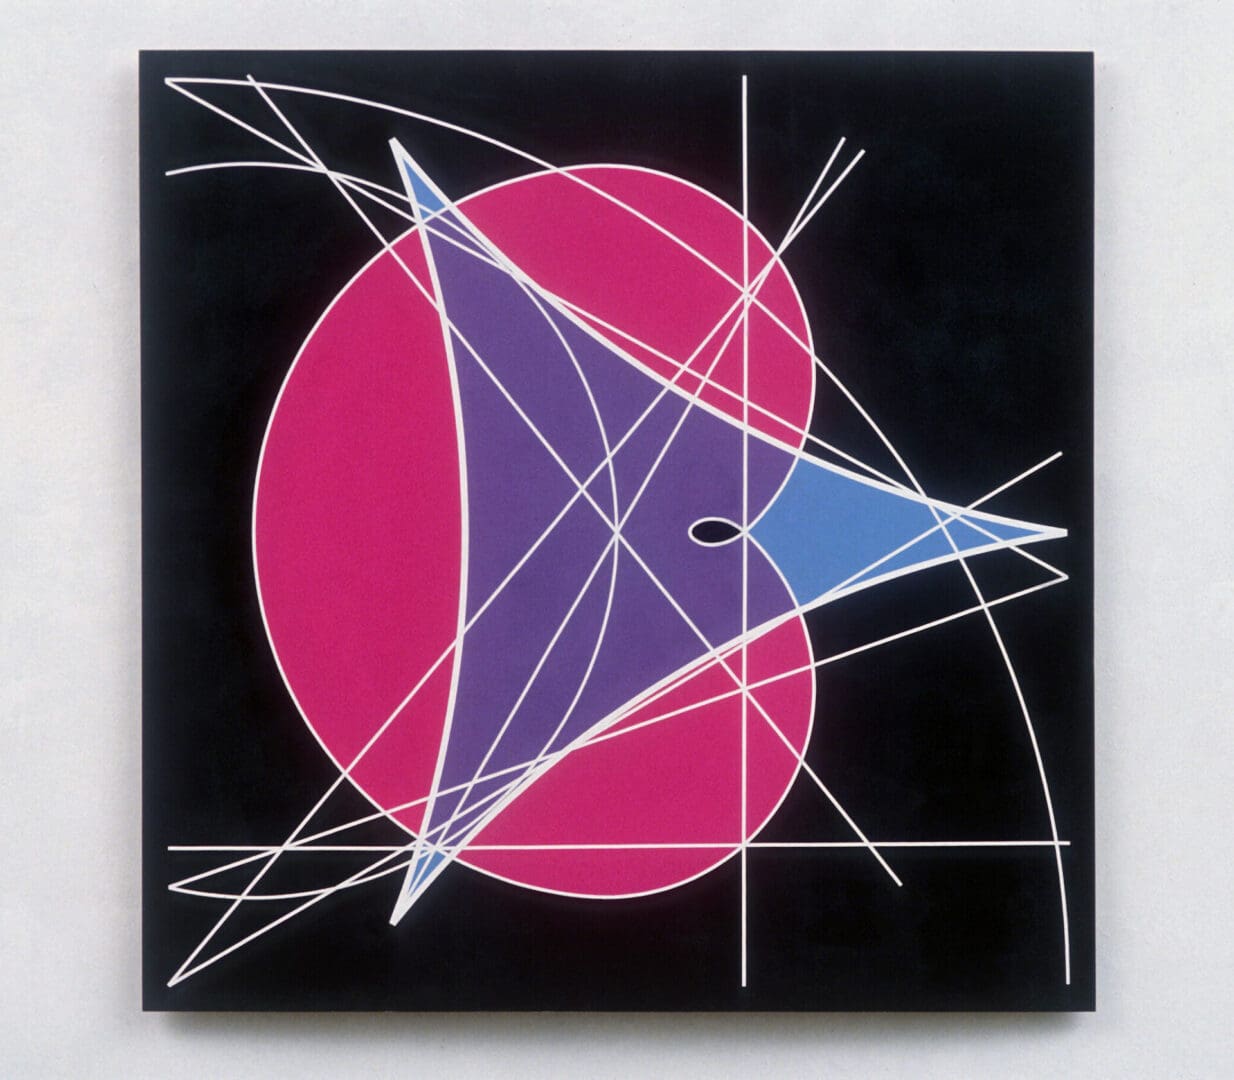 Clifford Singer. Non-Euclidean Triangle. 1998 -1999. Acrylic on Plexiglas. 36 x 36 inches